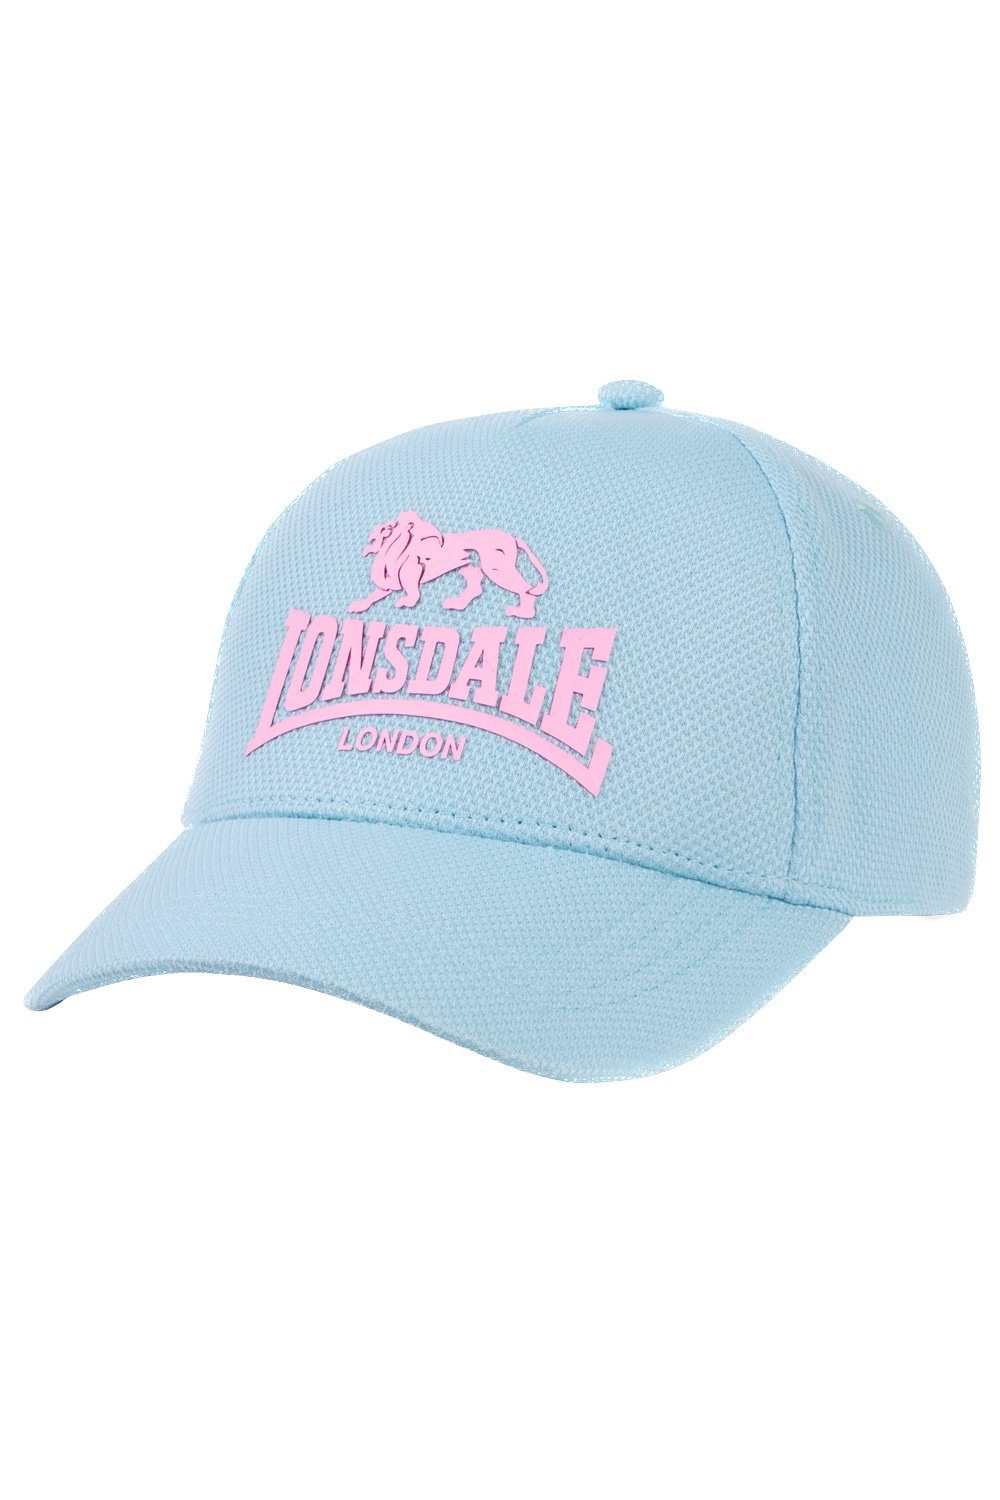 Lonsdale Baseball Unisex Lonsdale Cap Cap blue/rose BECKBURY